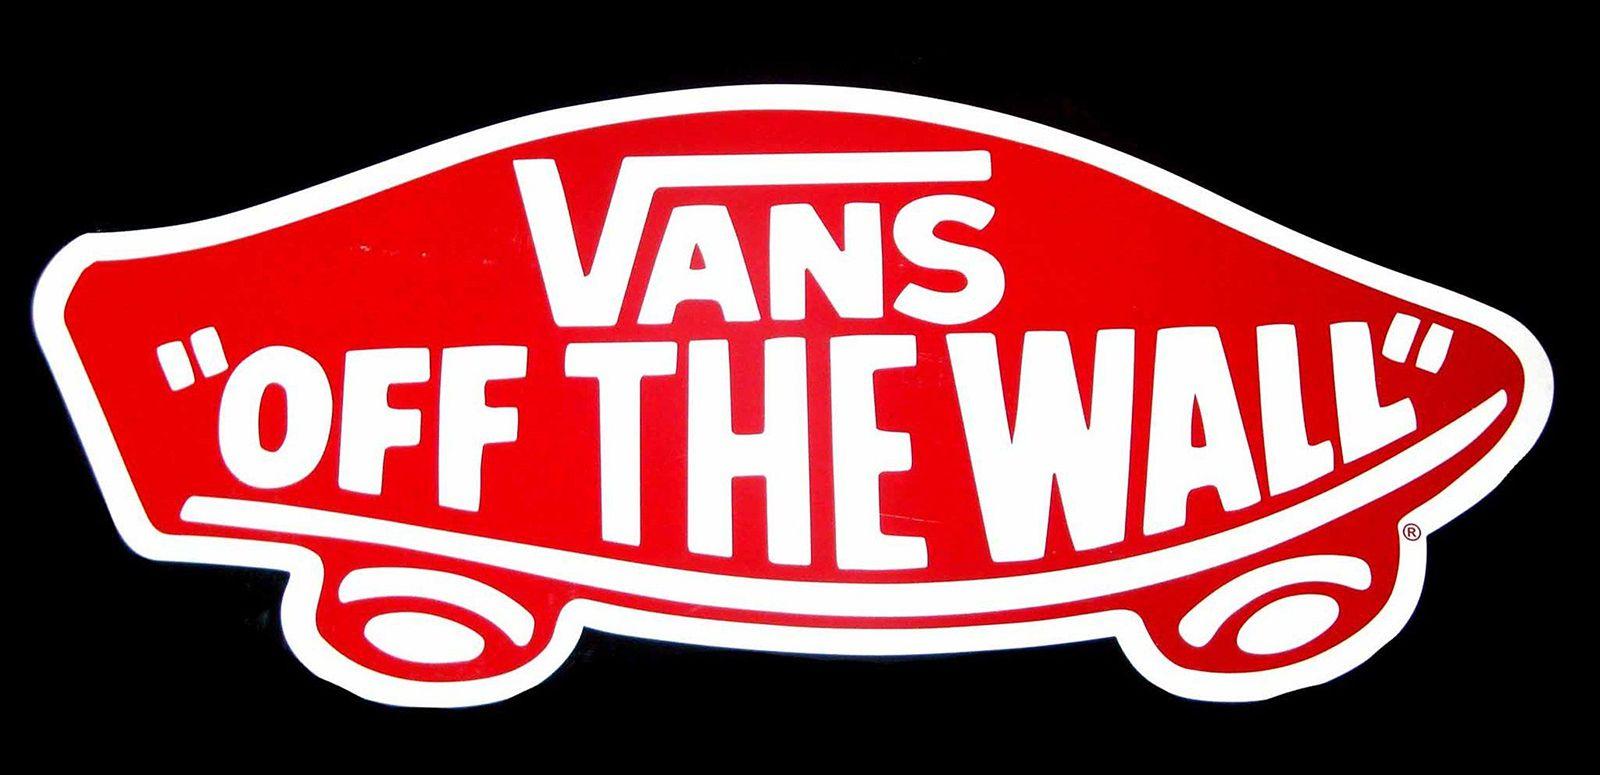 Vans Brand Logo - Color Vans Logo | All logos world in 2019 | Vans logo, Vans, Logos